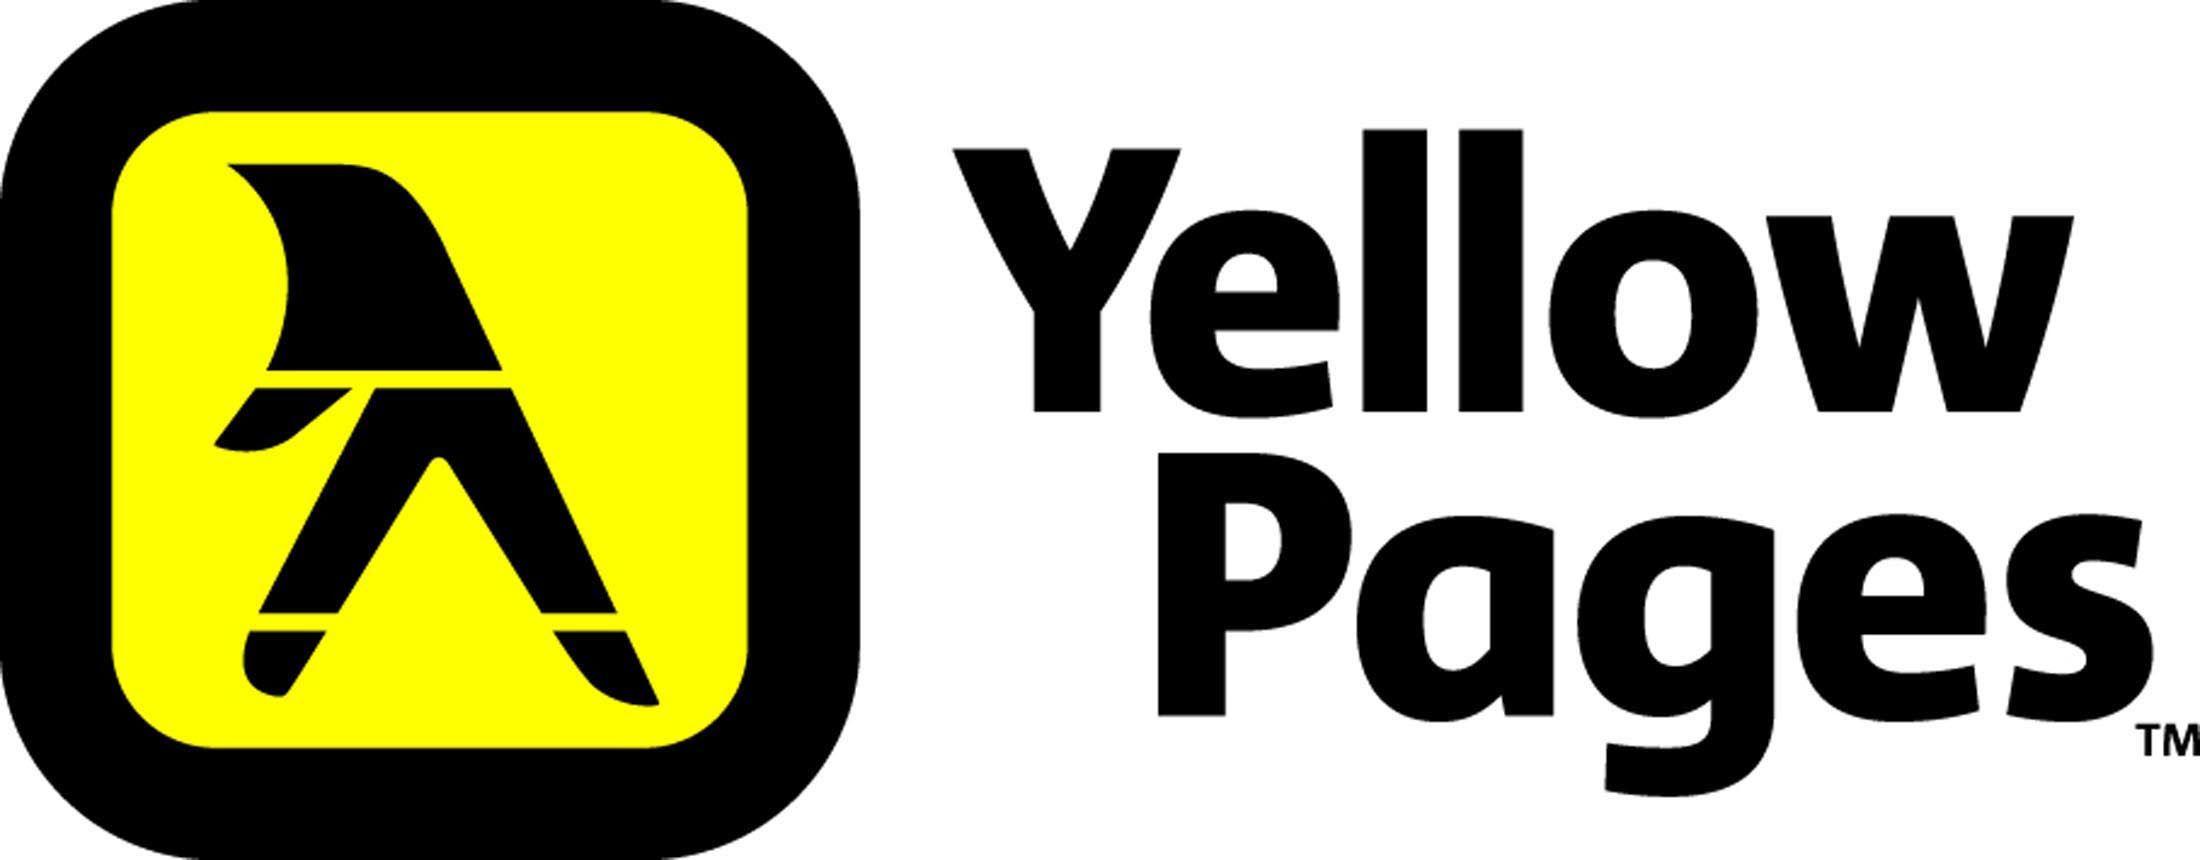 Yellow Pages Logo - Resultado de imagen de yellow pages logo. Logos. Logos